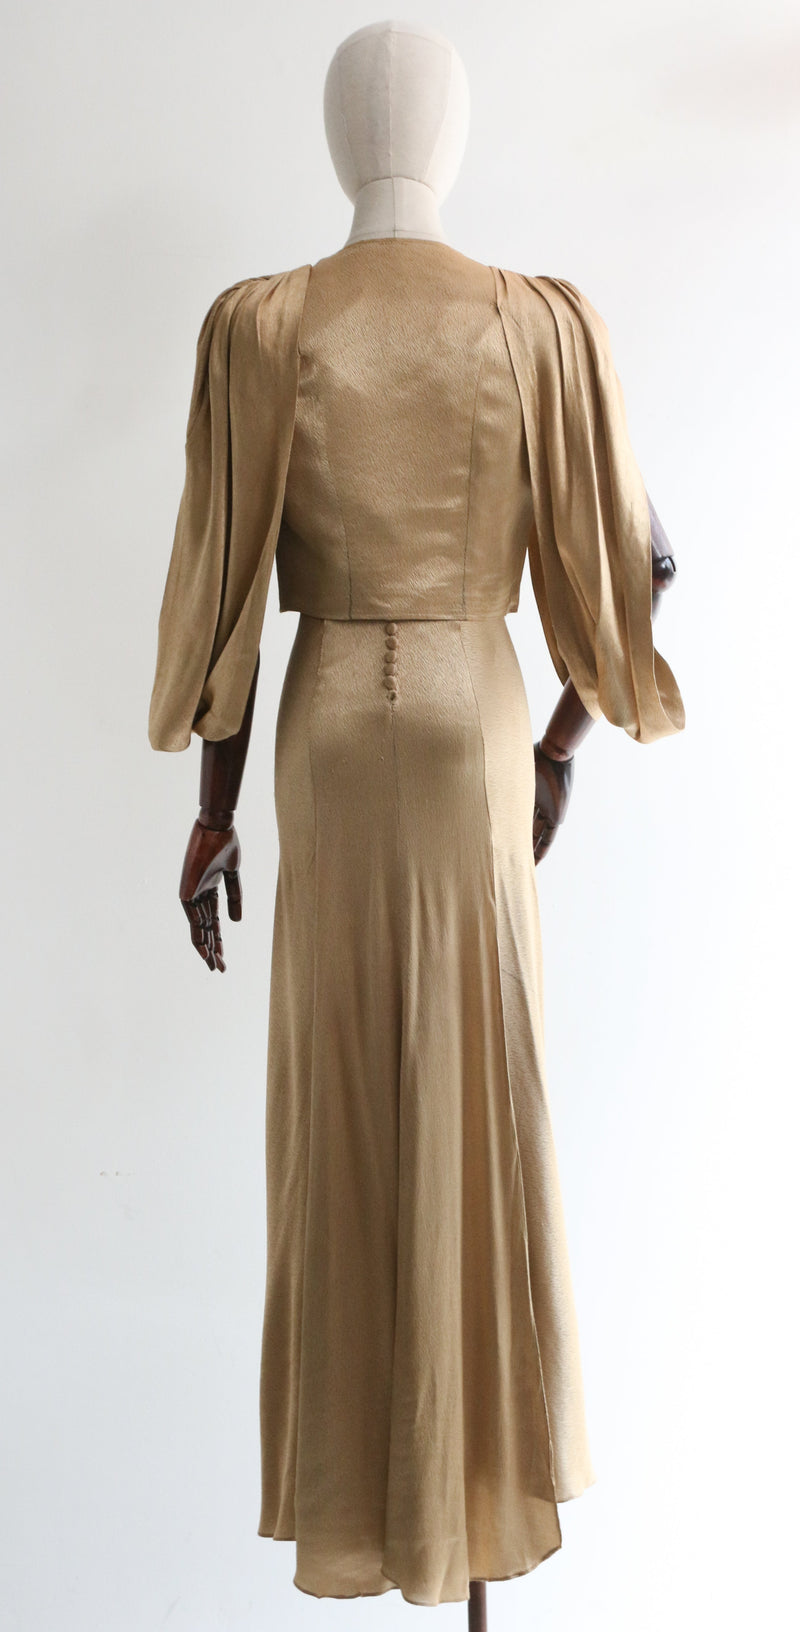 "Liquid Gold" Vintage 1930's Gold Satin Dress & Jacket UK 6-8 US 2-4